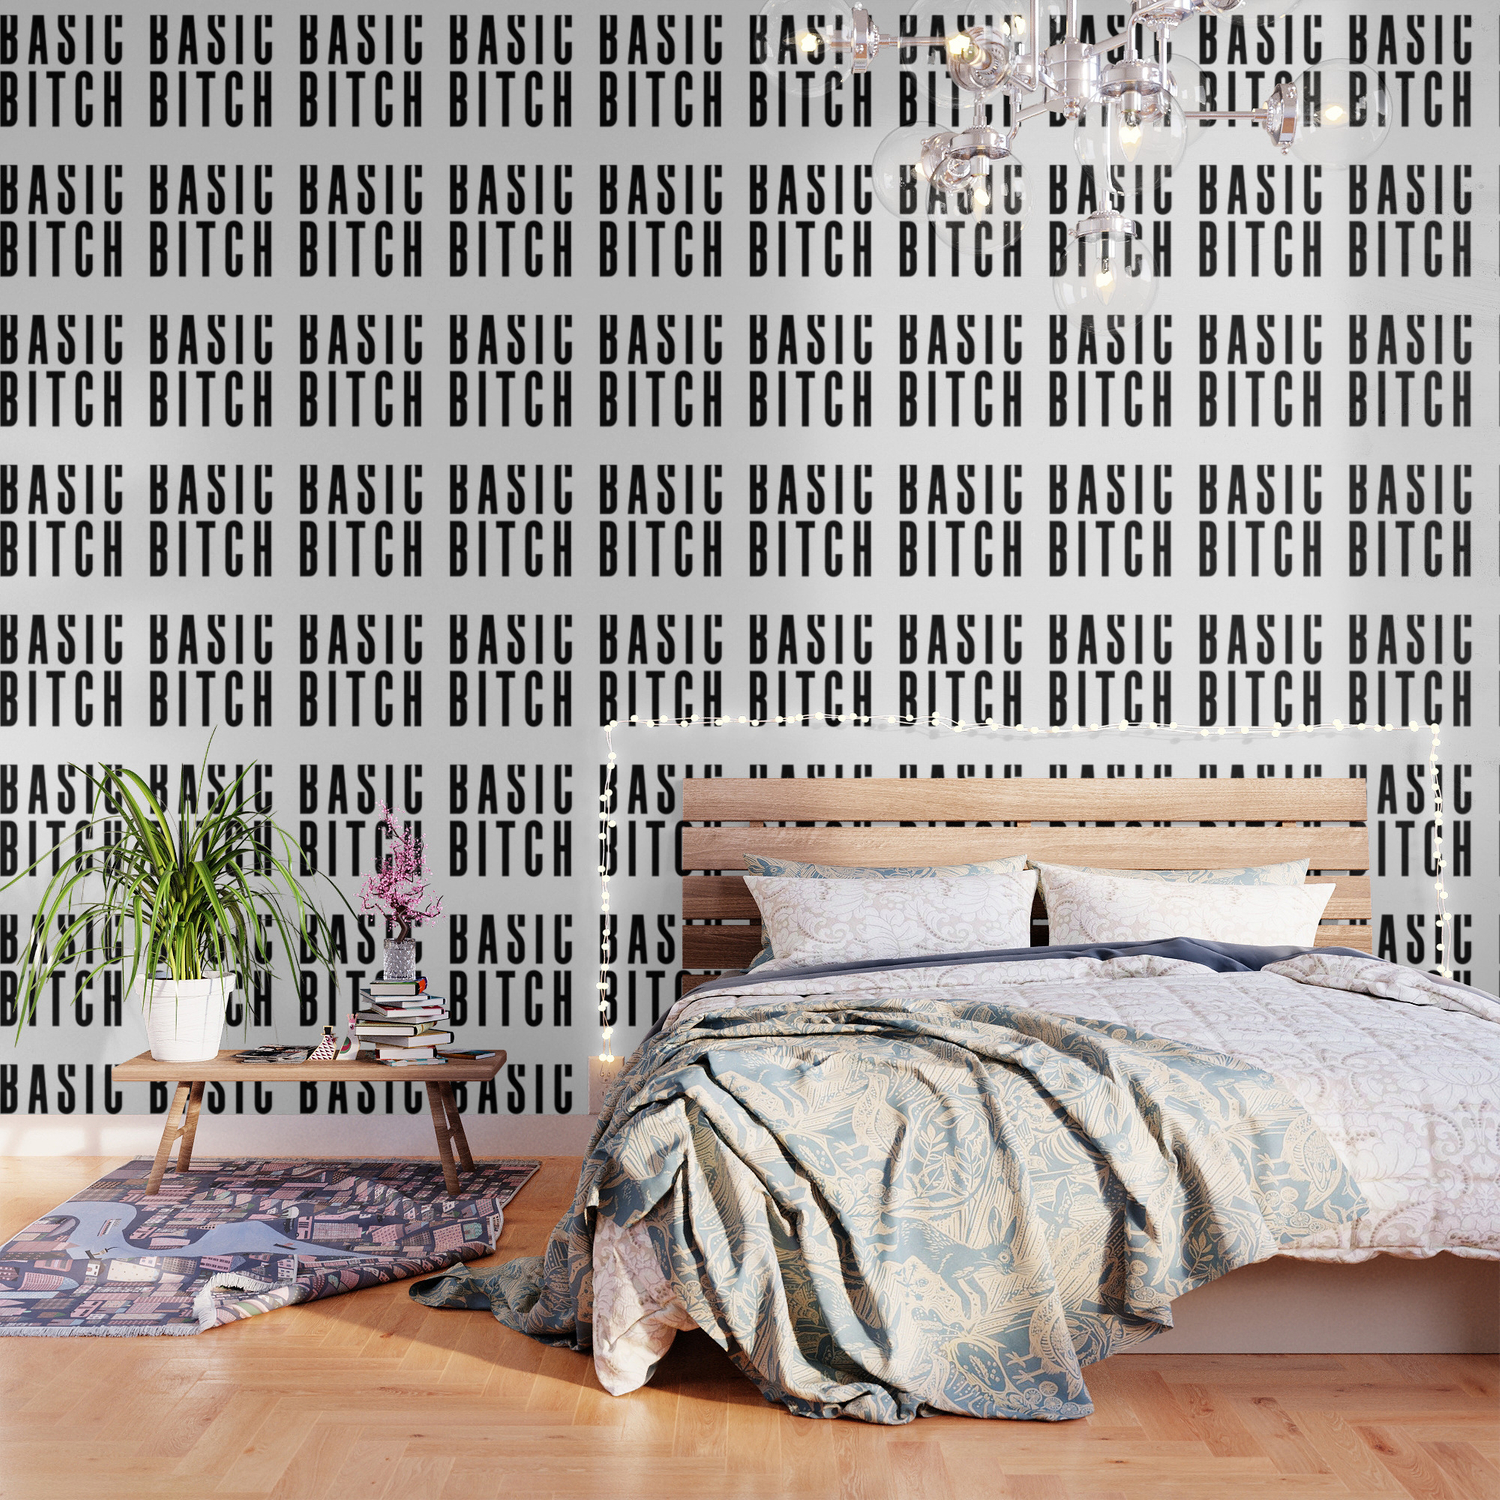 Basic Bitch Product Lifestyle Trending Designs Ltd Wallpaper